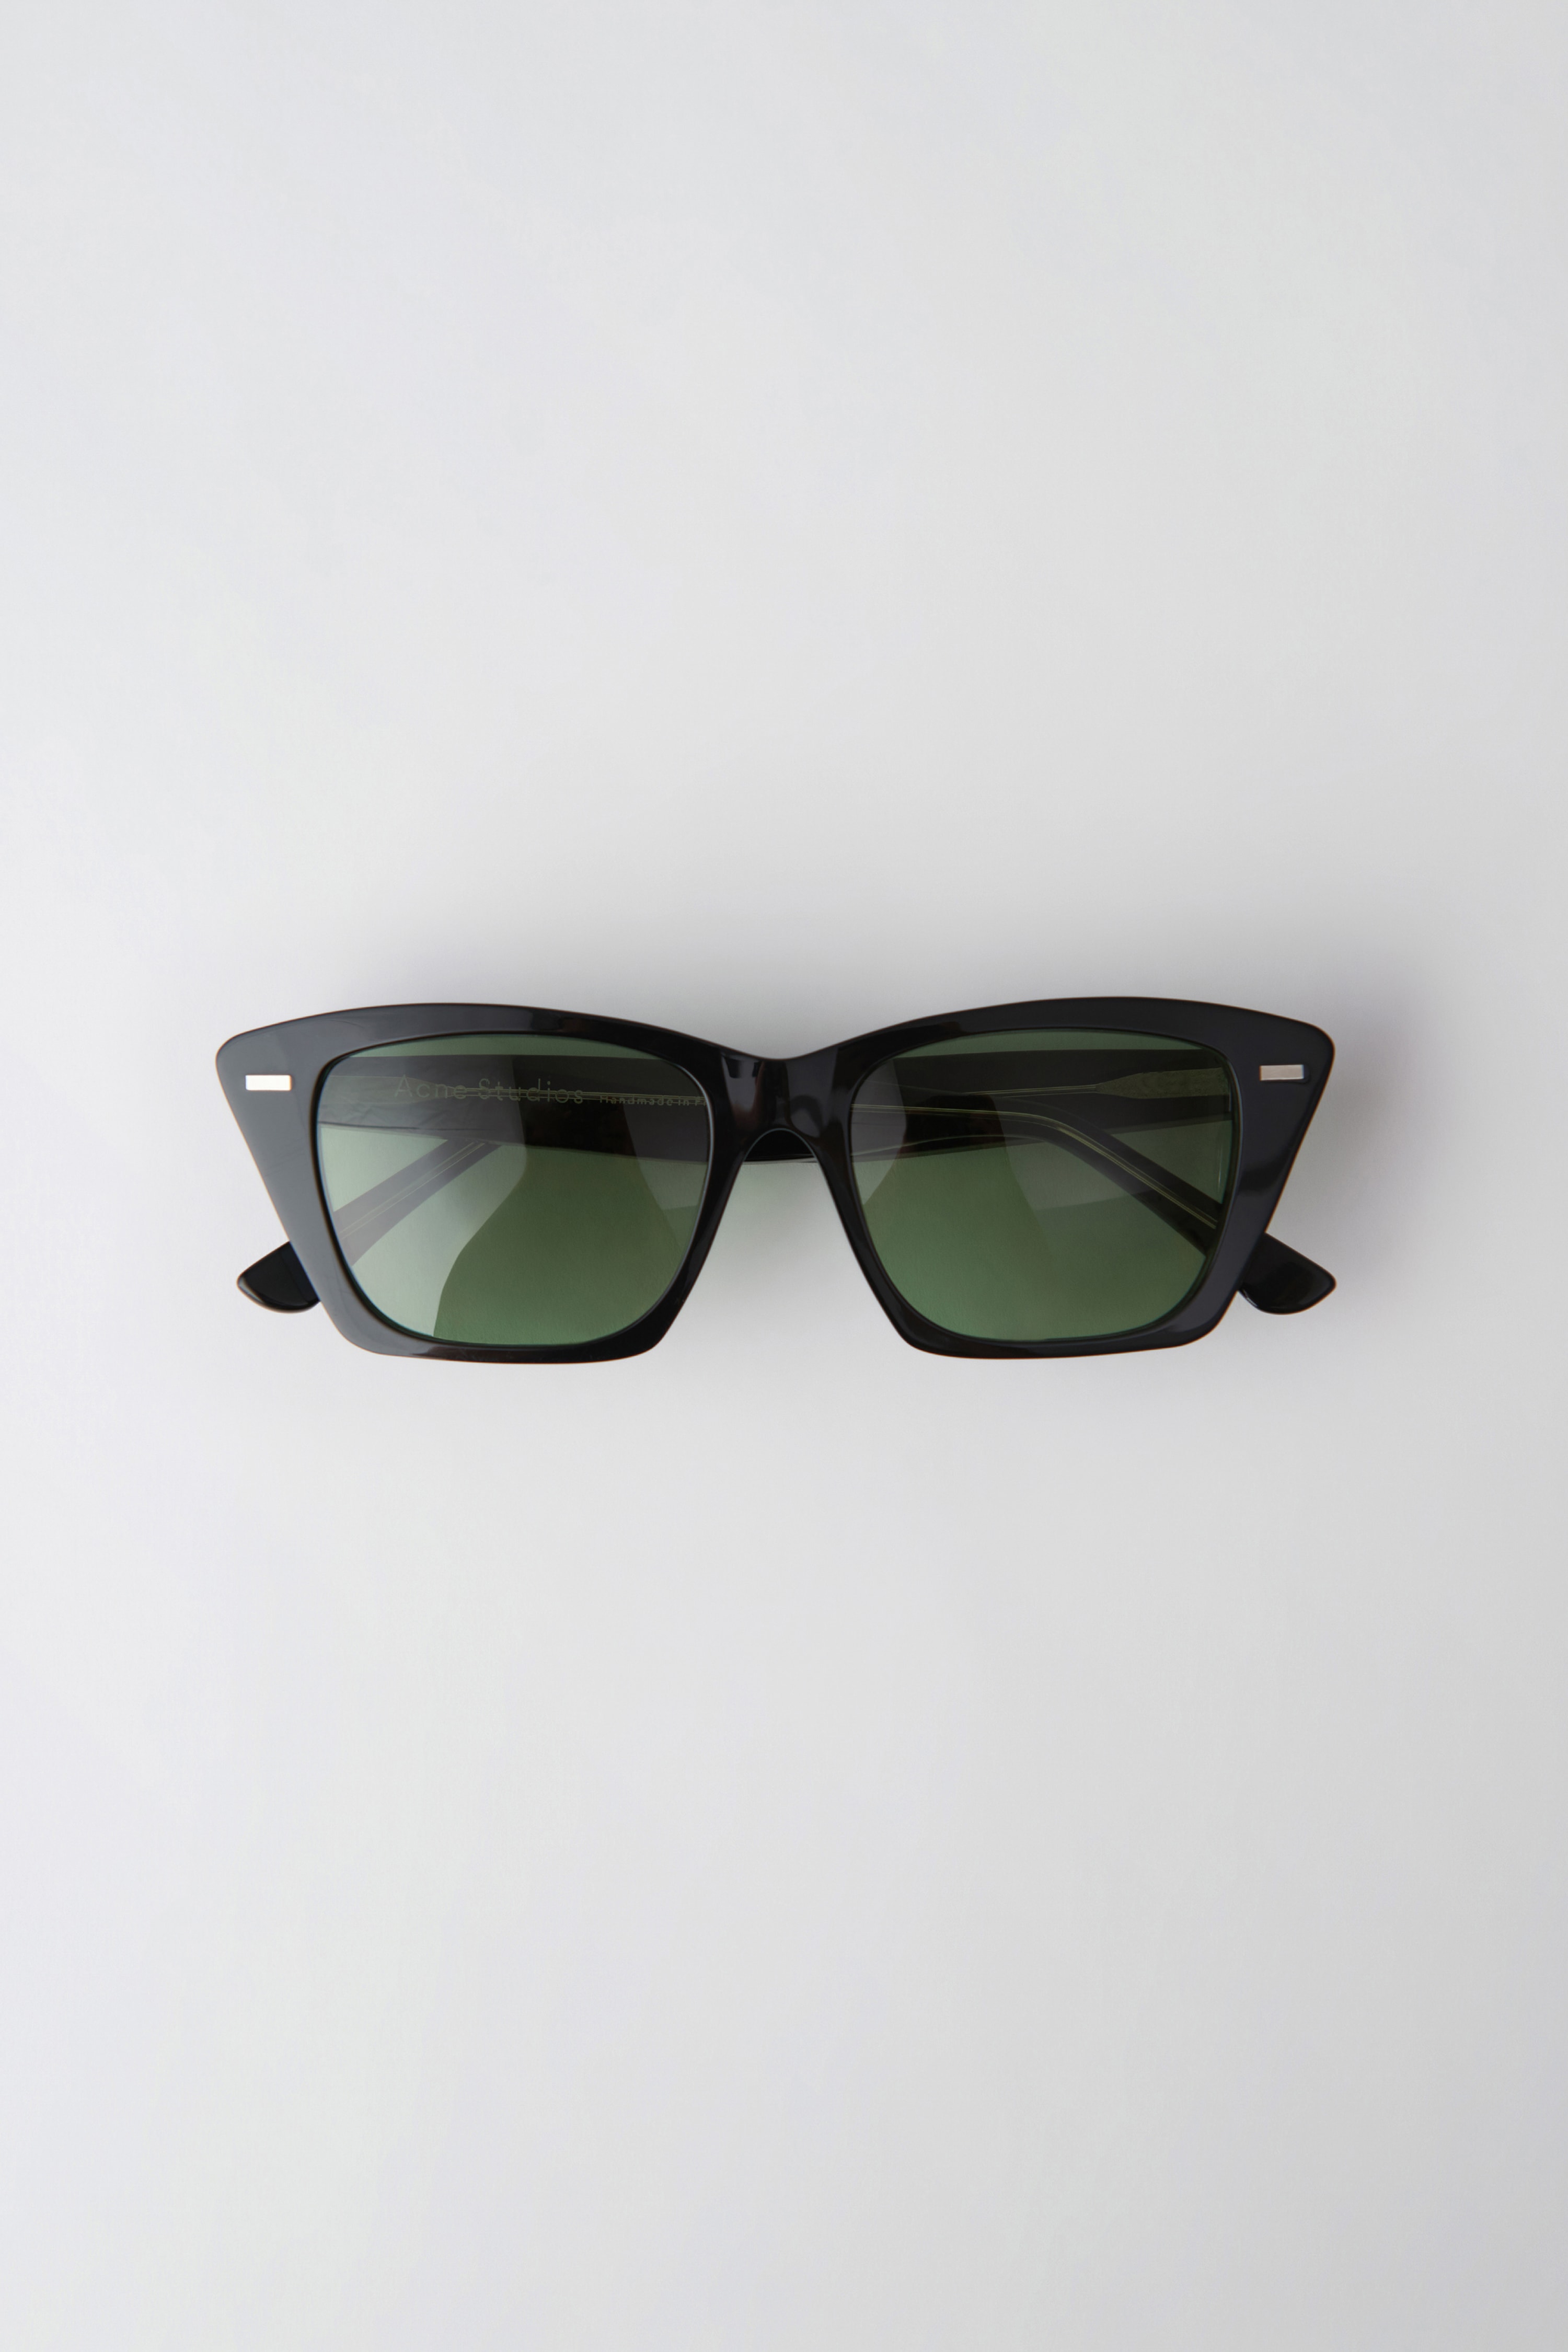 Acne Studios Spring/Summer 2019 Sunglasses Range Shades Eyewear Accessories 